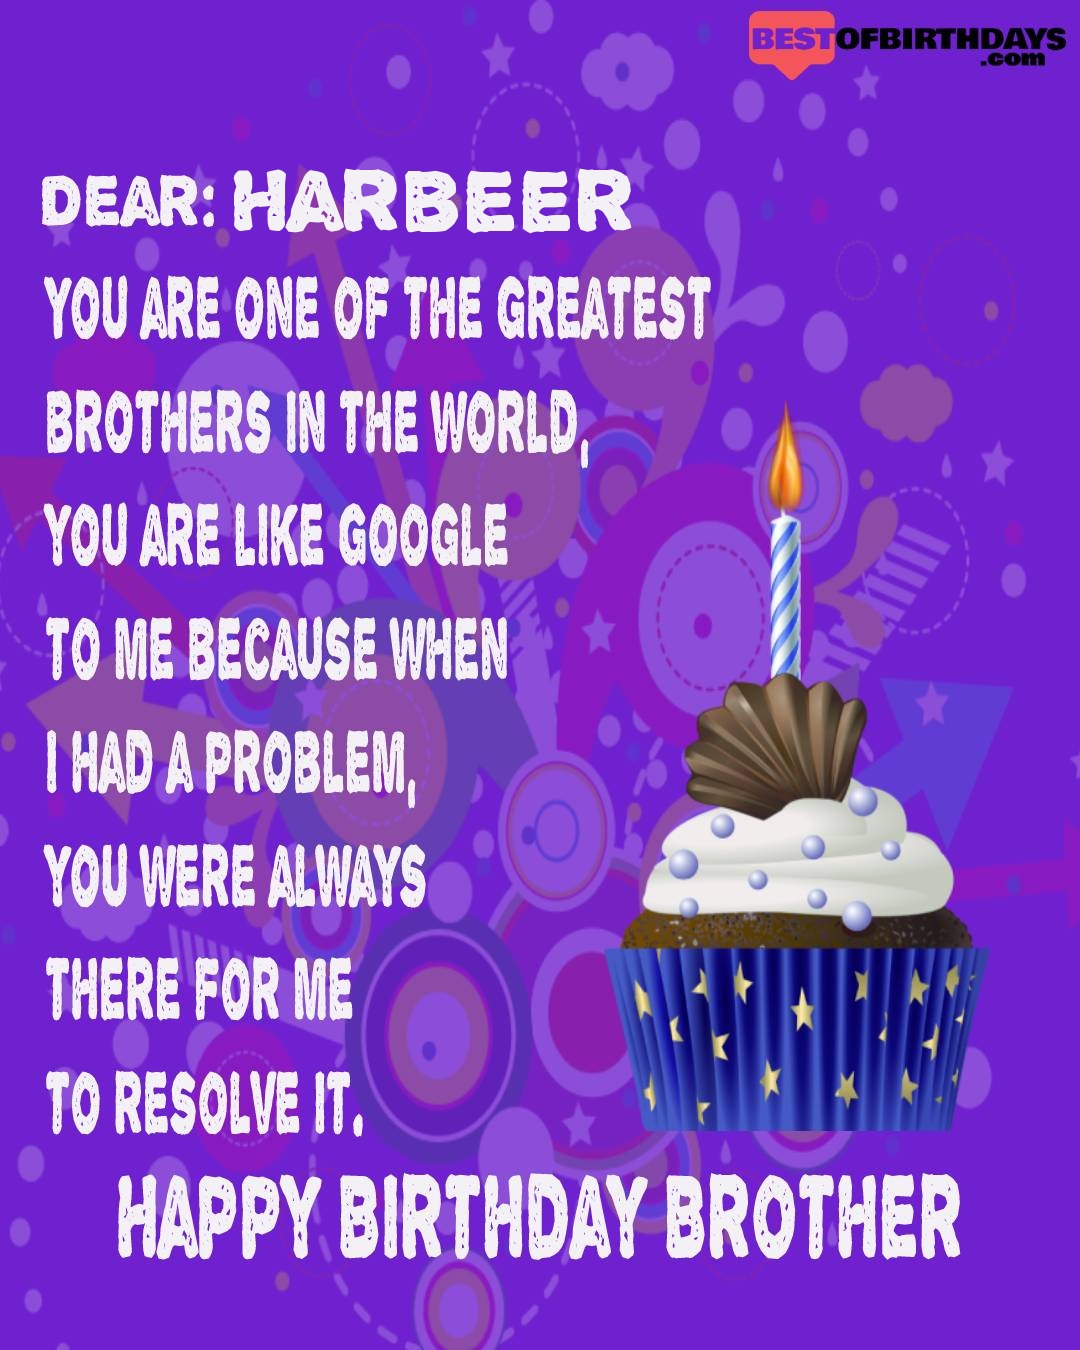 Happy birthday harbeer bhai brother bro